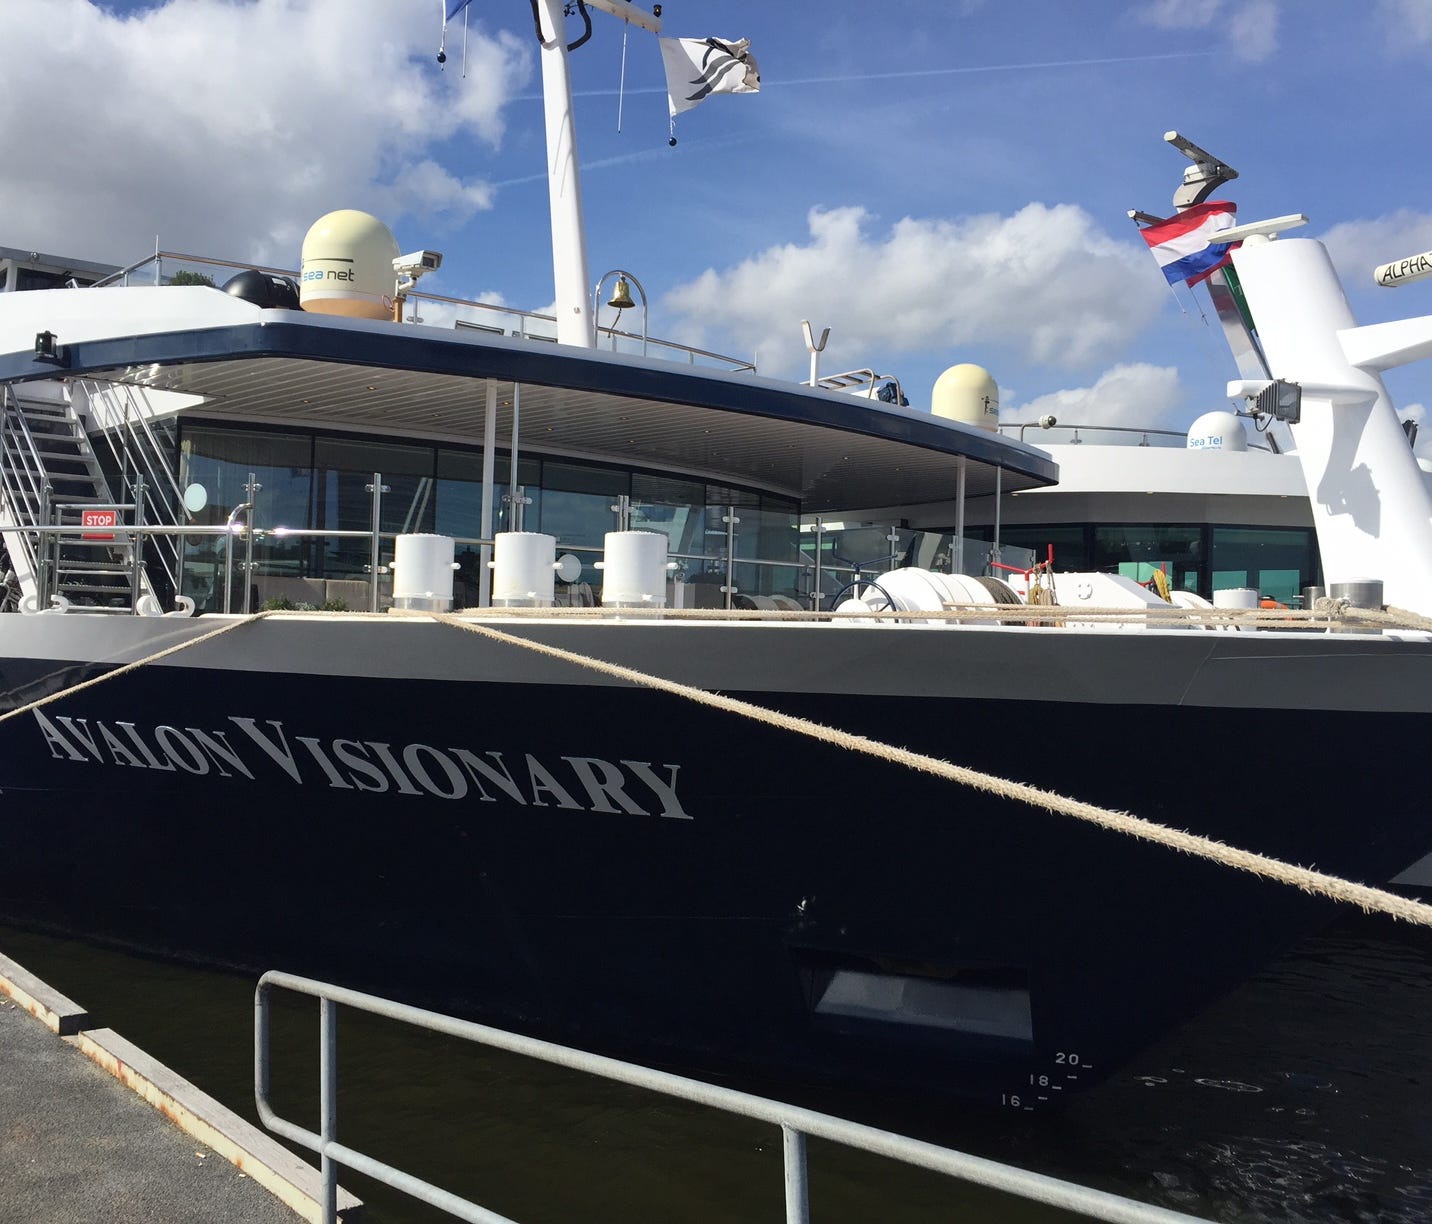 Avalon Waterways' 128-passenger Avalon Visionary docked in Amsterdam.